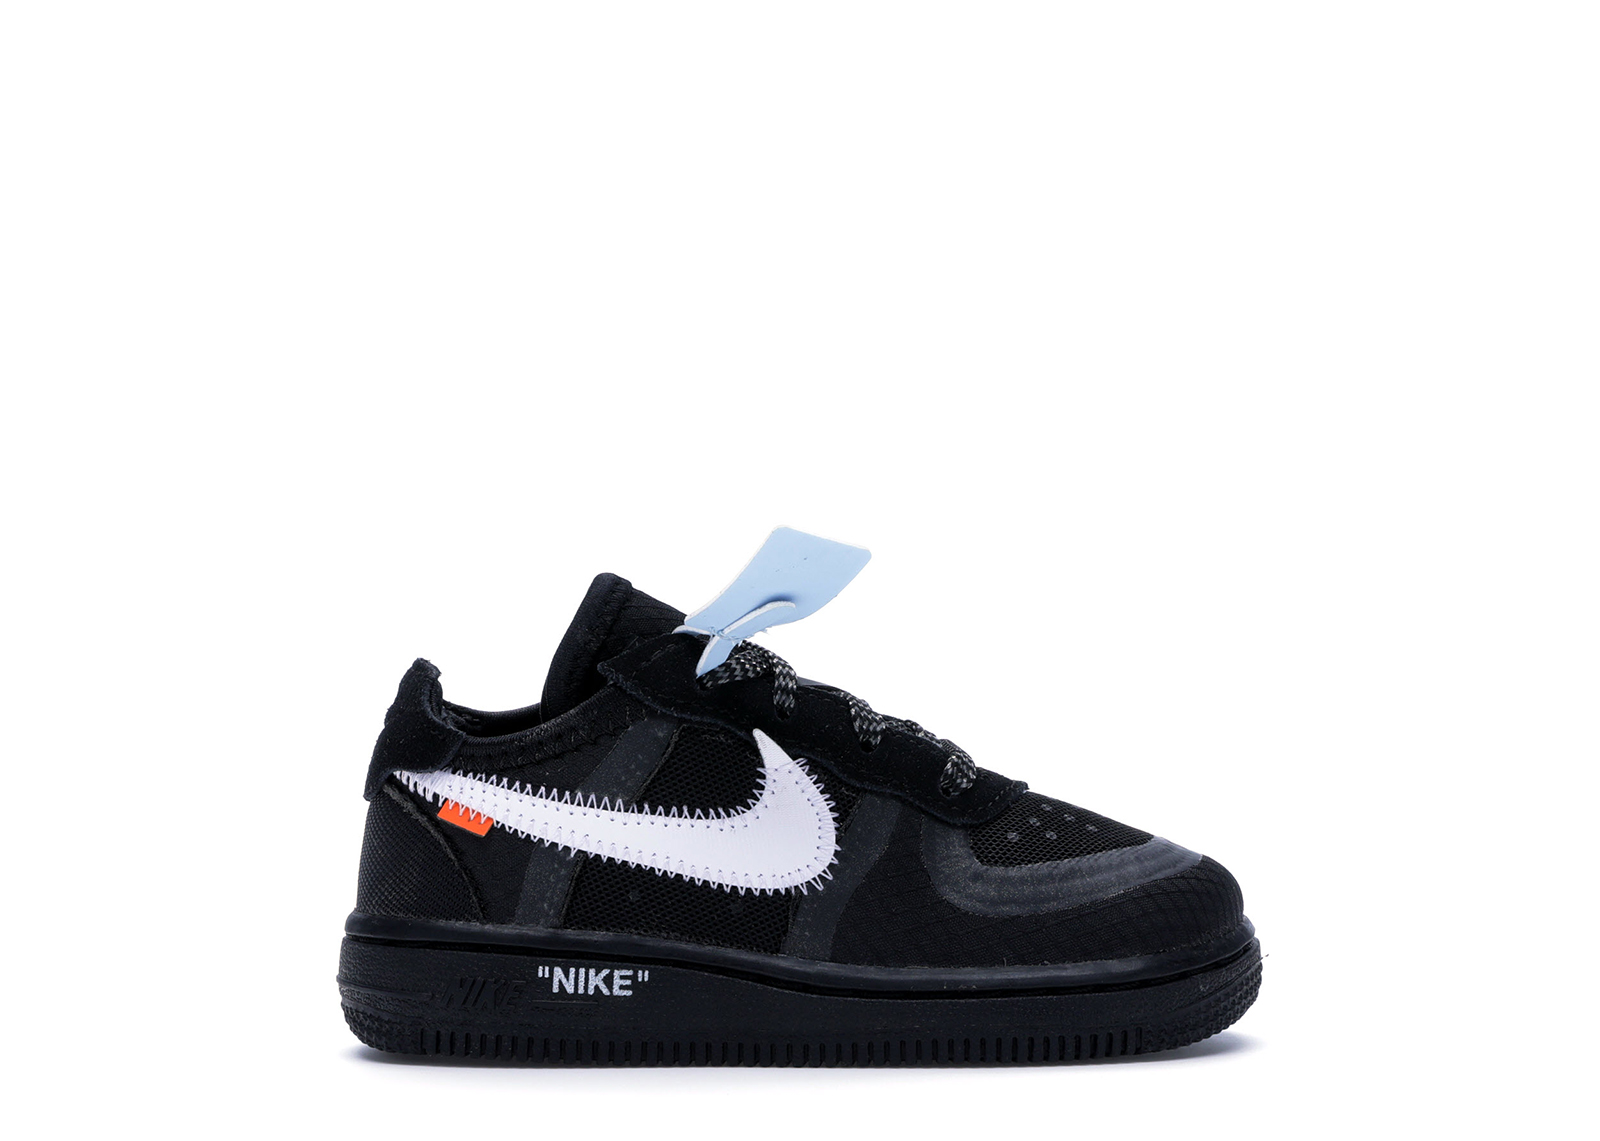 Nike Air Force 1 Low Off-White Black White (TD) Toddler - BV0853